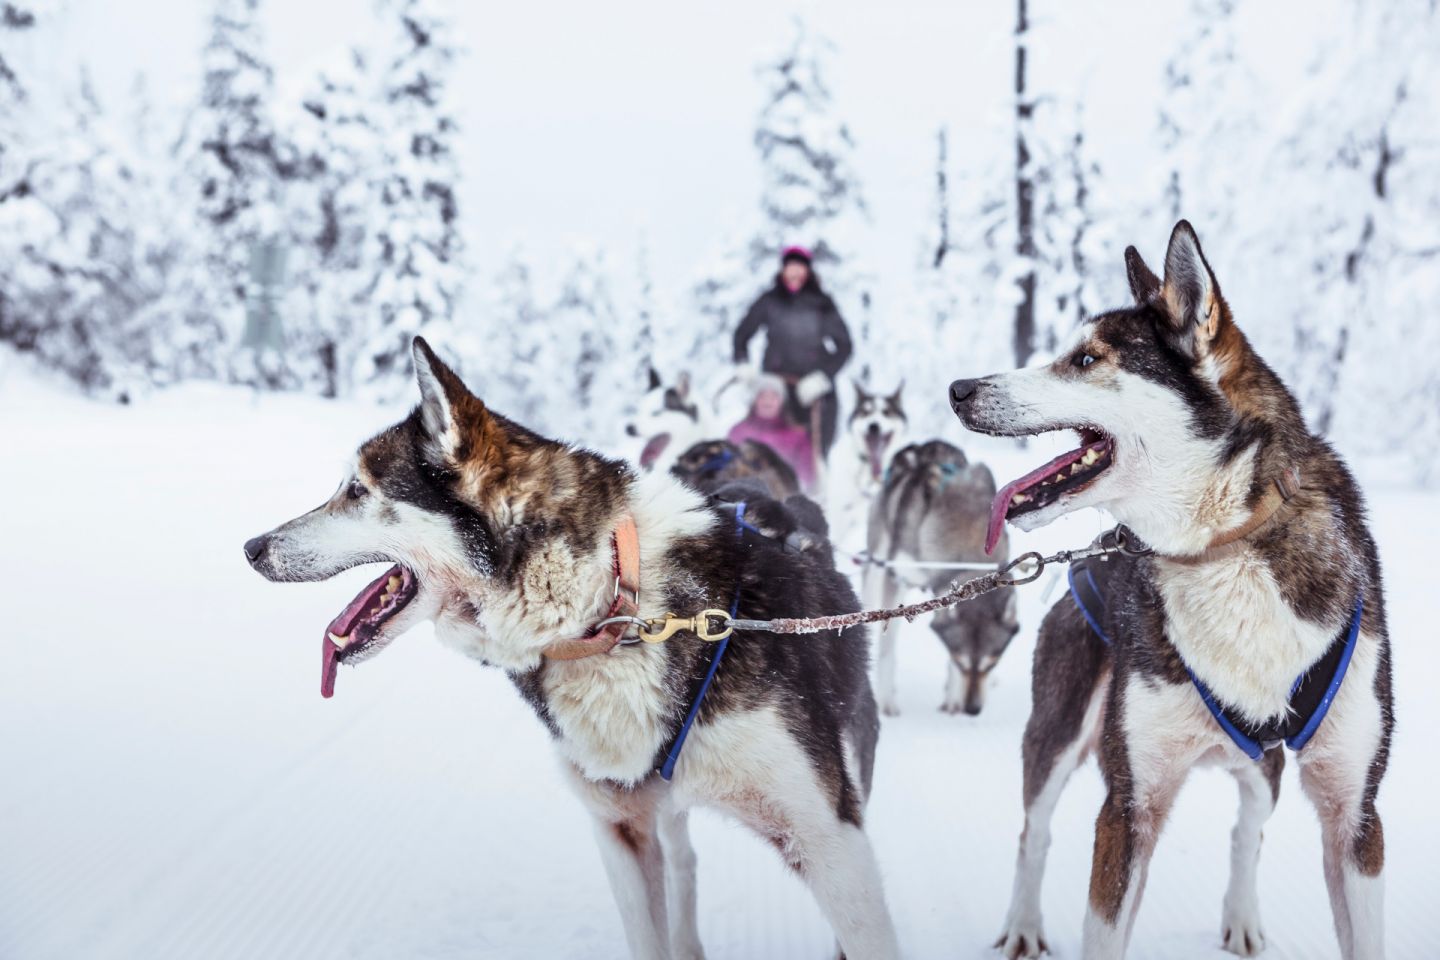 A husky sledge ride in Pyhä-Luosto, Finland